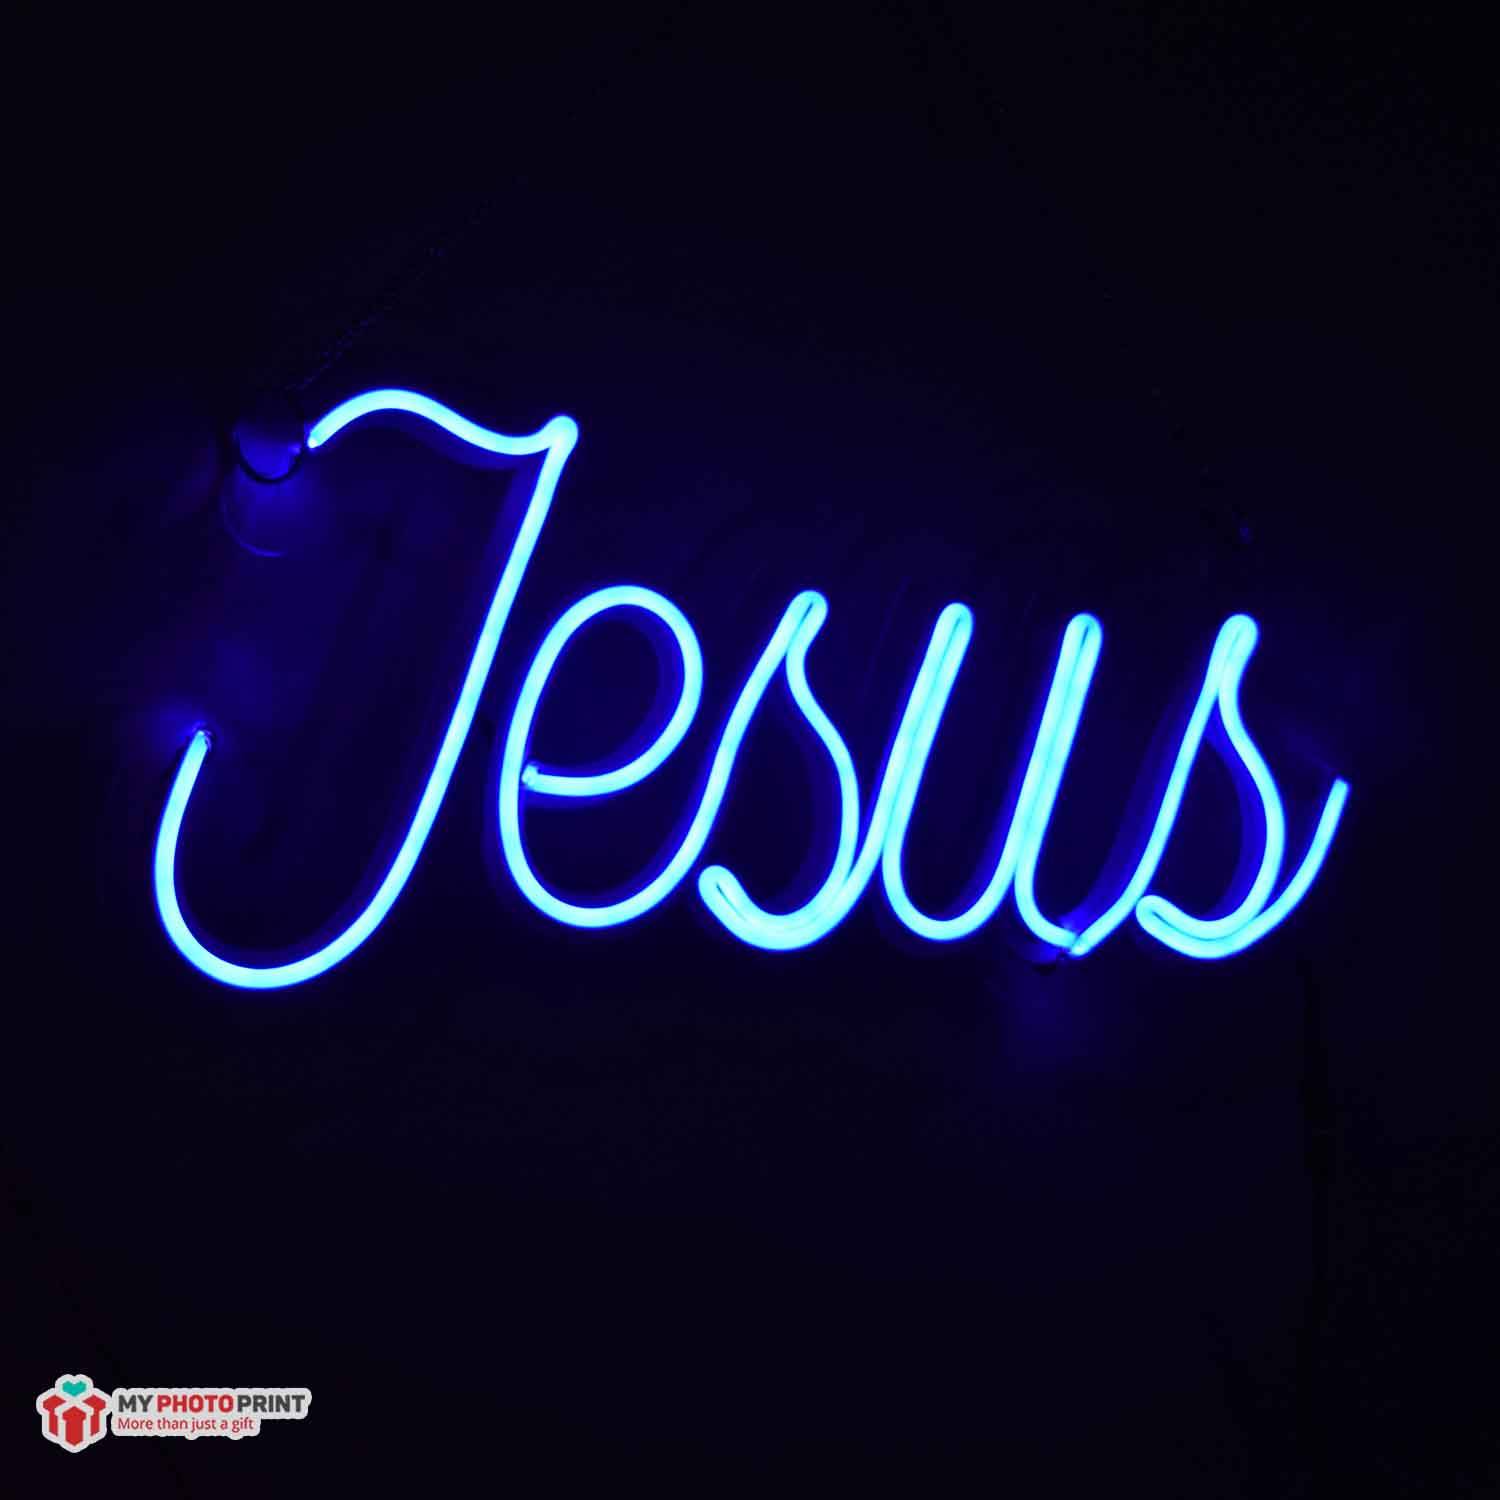 NEON JESUS LED NEON SIGN DECORATIVE LIGHTS WALL DECOR